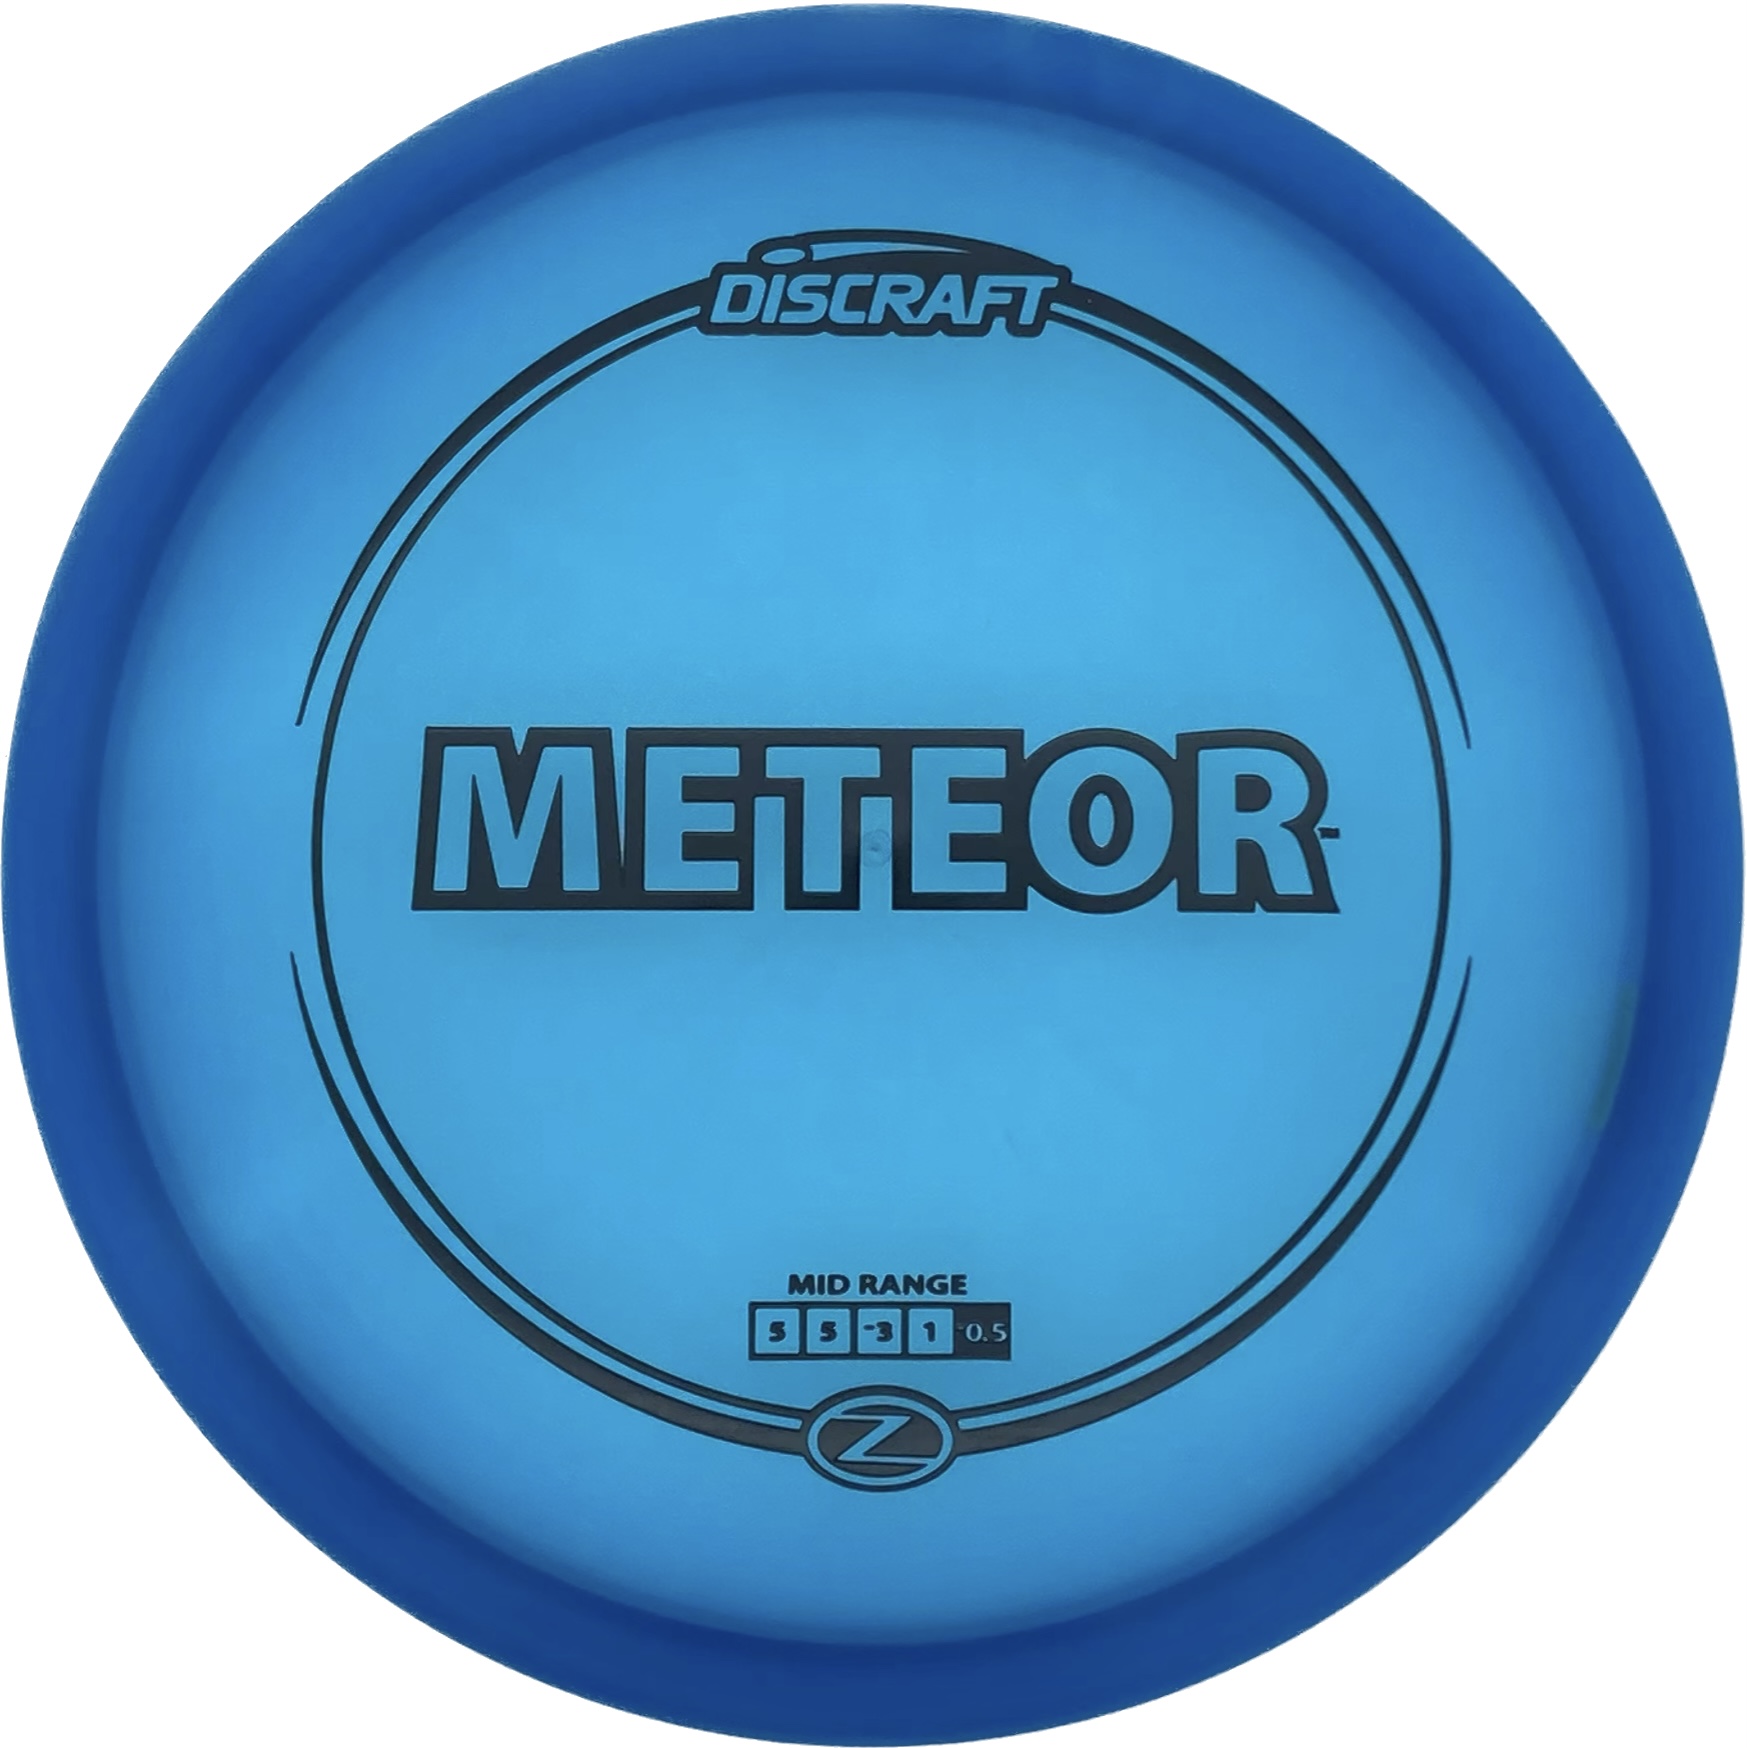 Discraft's Z Meteor (Blue w/ Black Stamp)